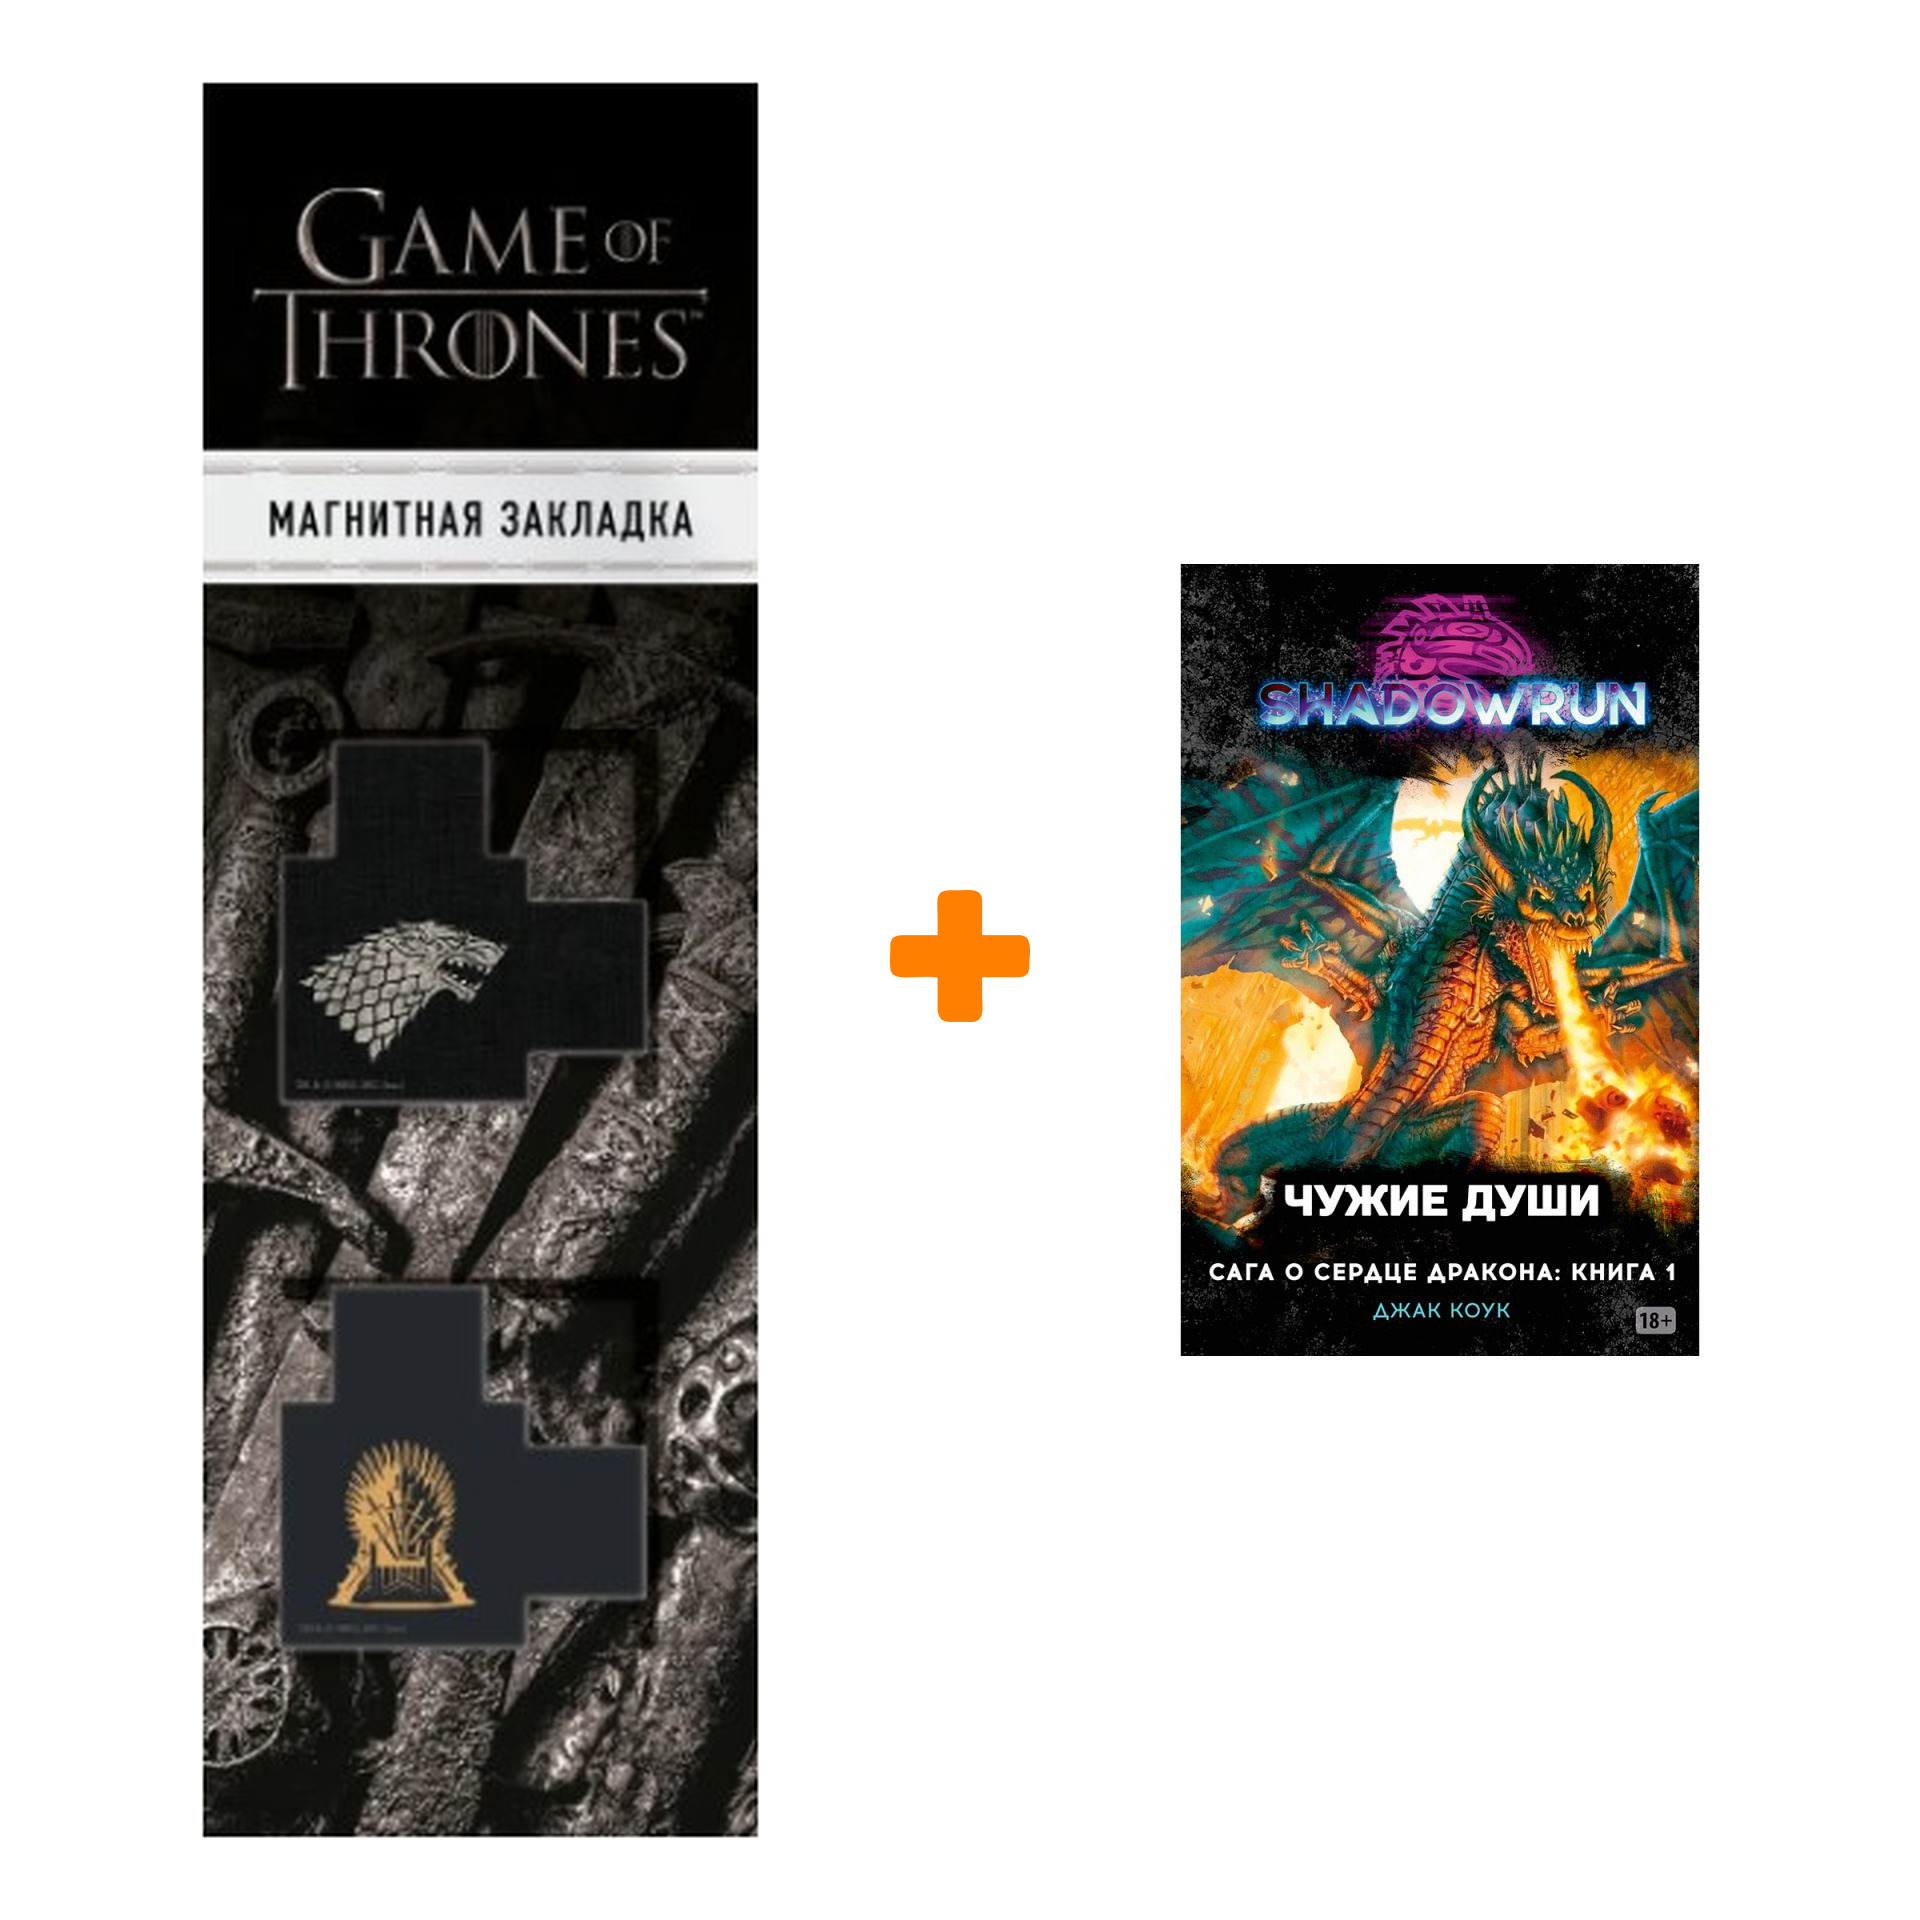 Набор Shadowrun: Сага о Сердце Дракона: Книга 1 Чужие души + Закладка Game Of Thrones Трон и Герб Старков магнитная 2-Pack